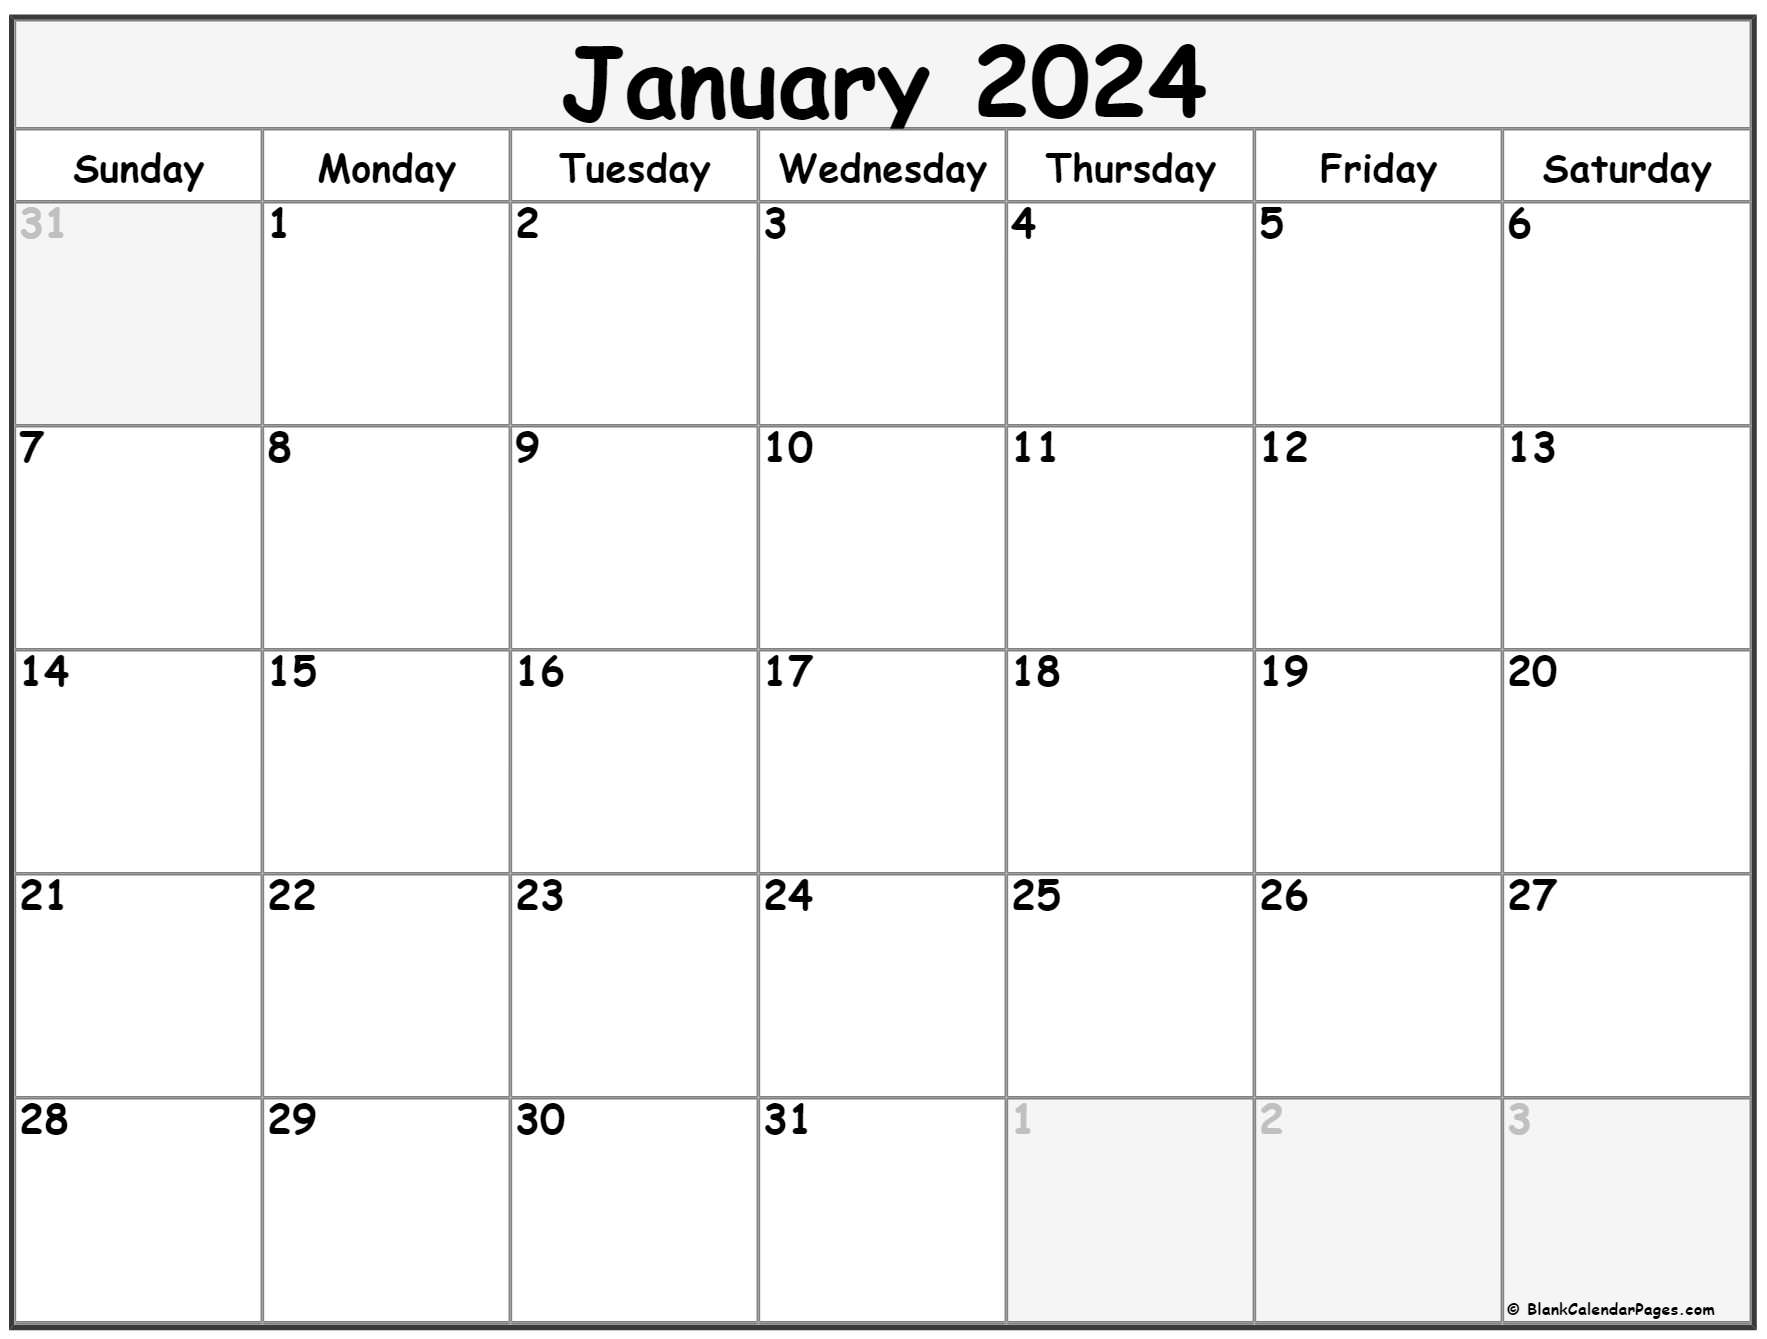 January 2024 Moon Calendar Top Amazing Review Of January 2024 Calendar Blank